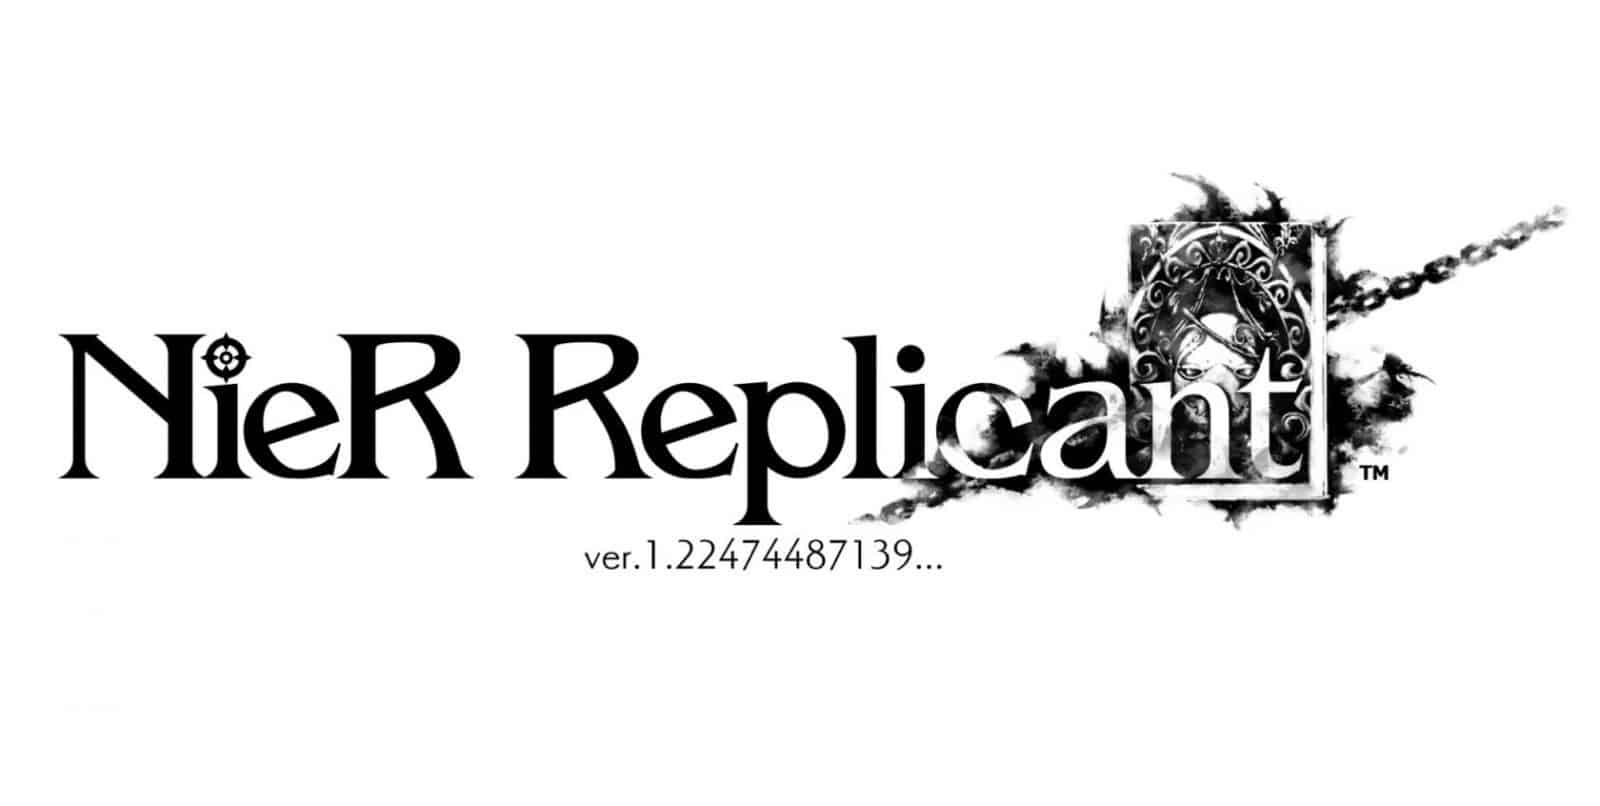 nier replicant logo